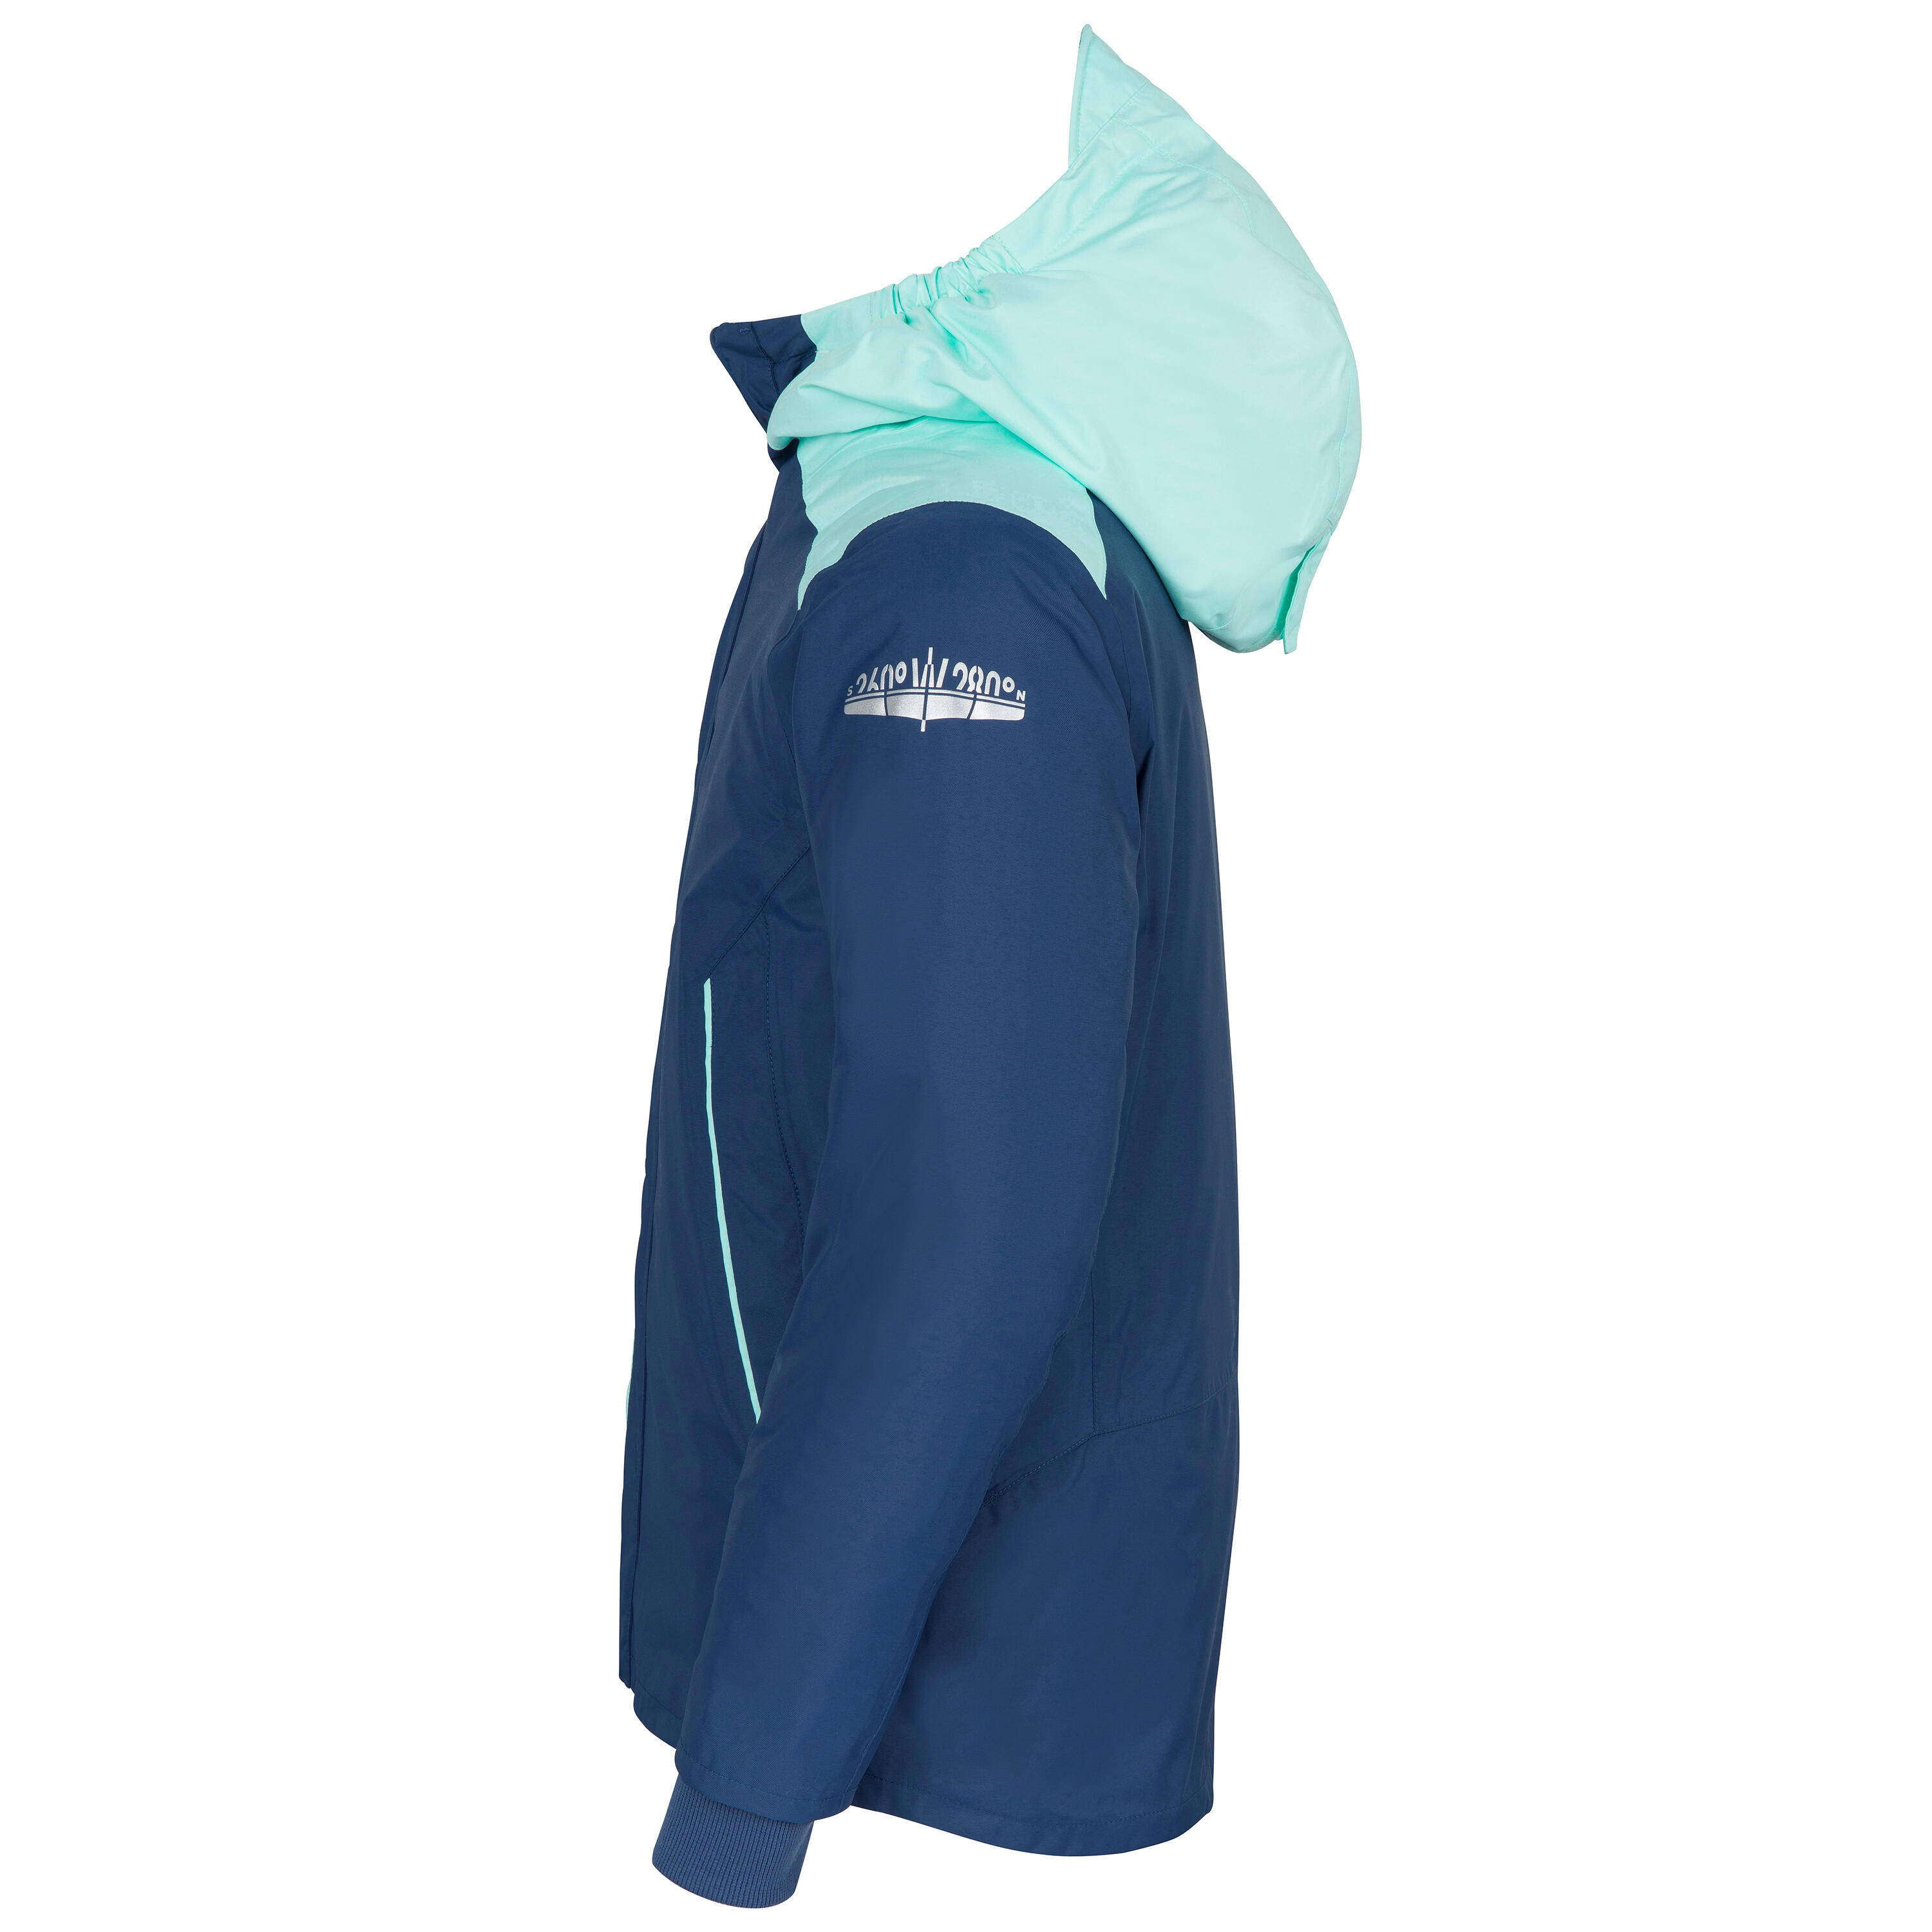 Kids sailing jacket warm and waterproof Sailing 100 blue mint 6/12